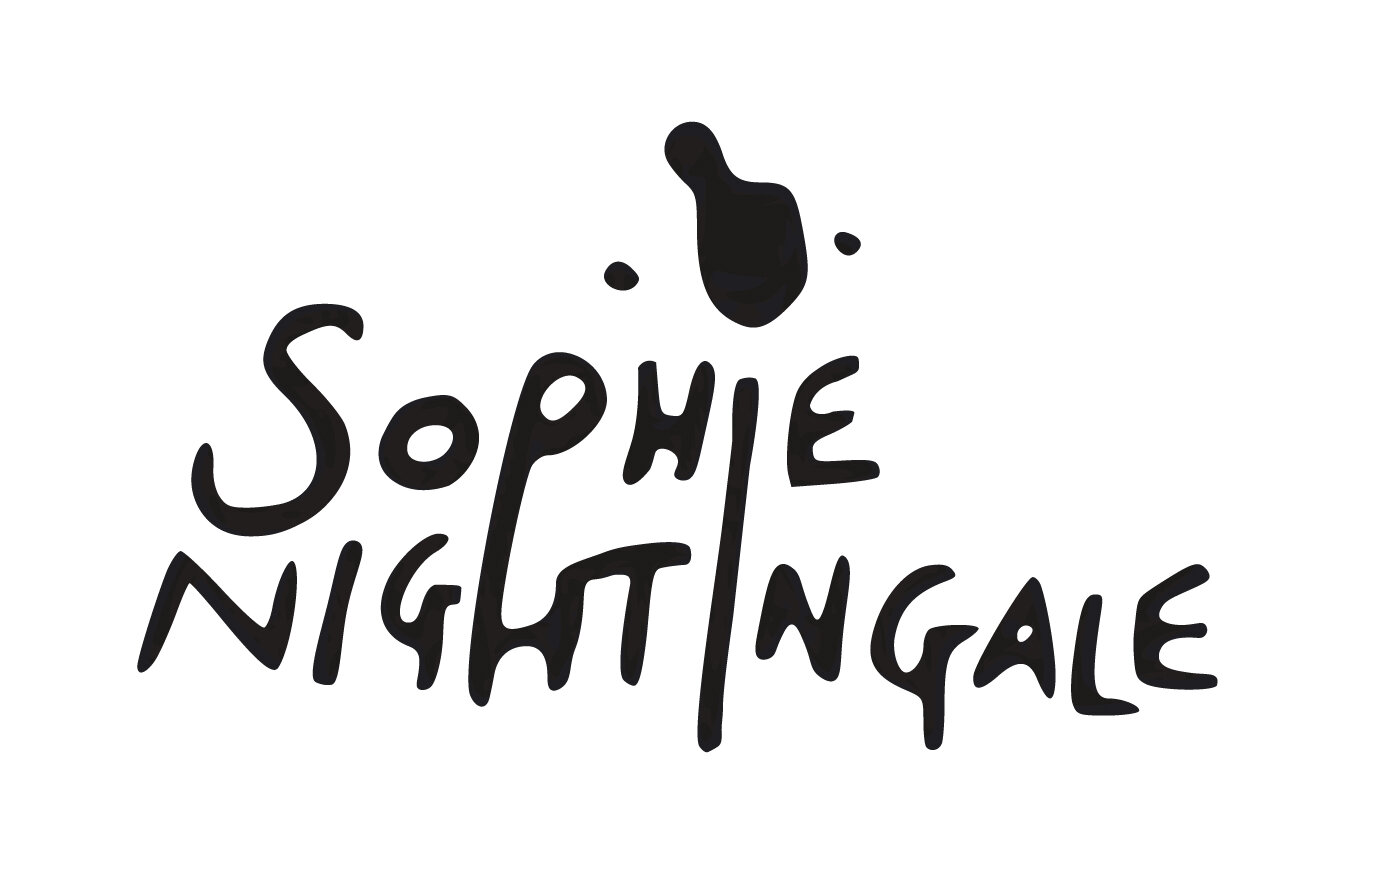 Sophie Nightingale